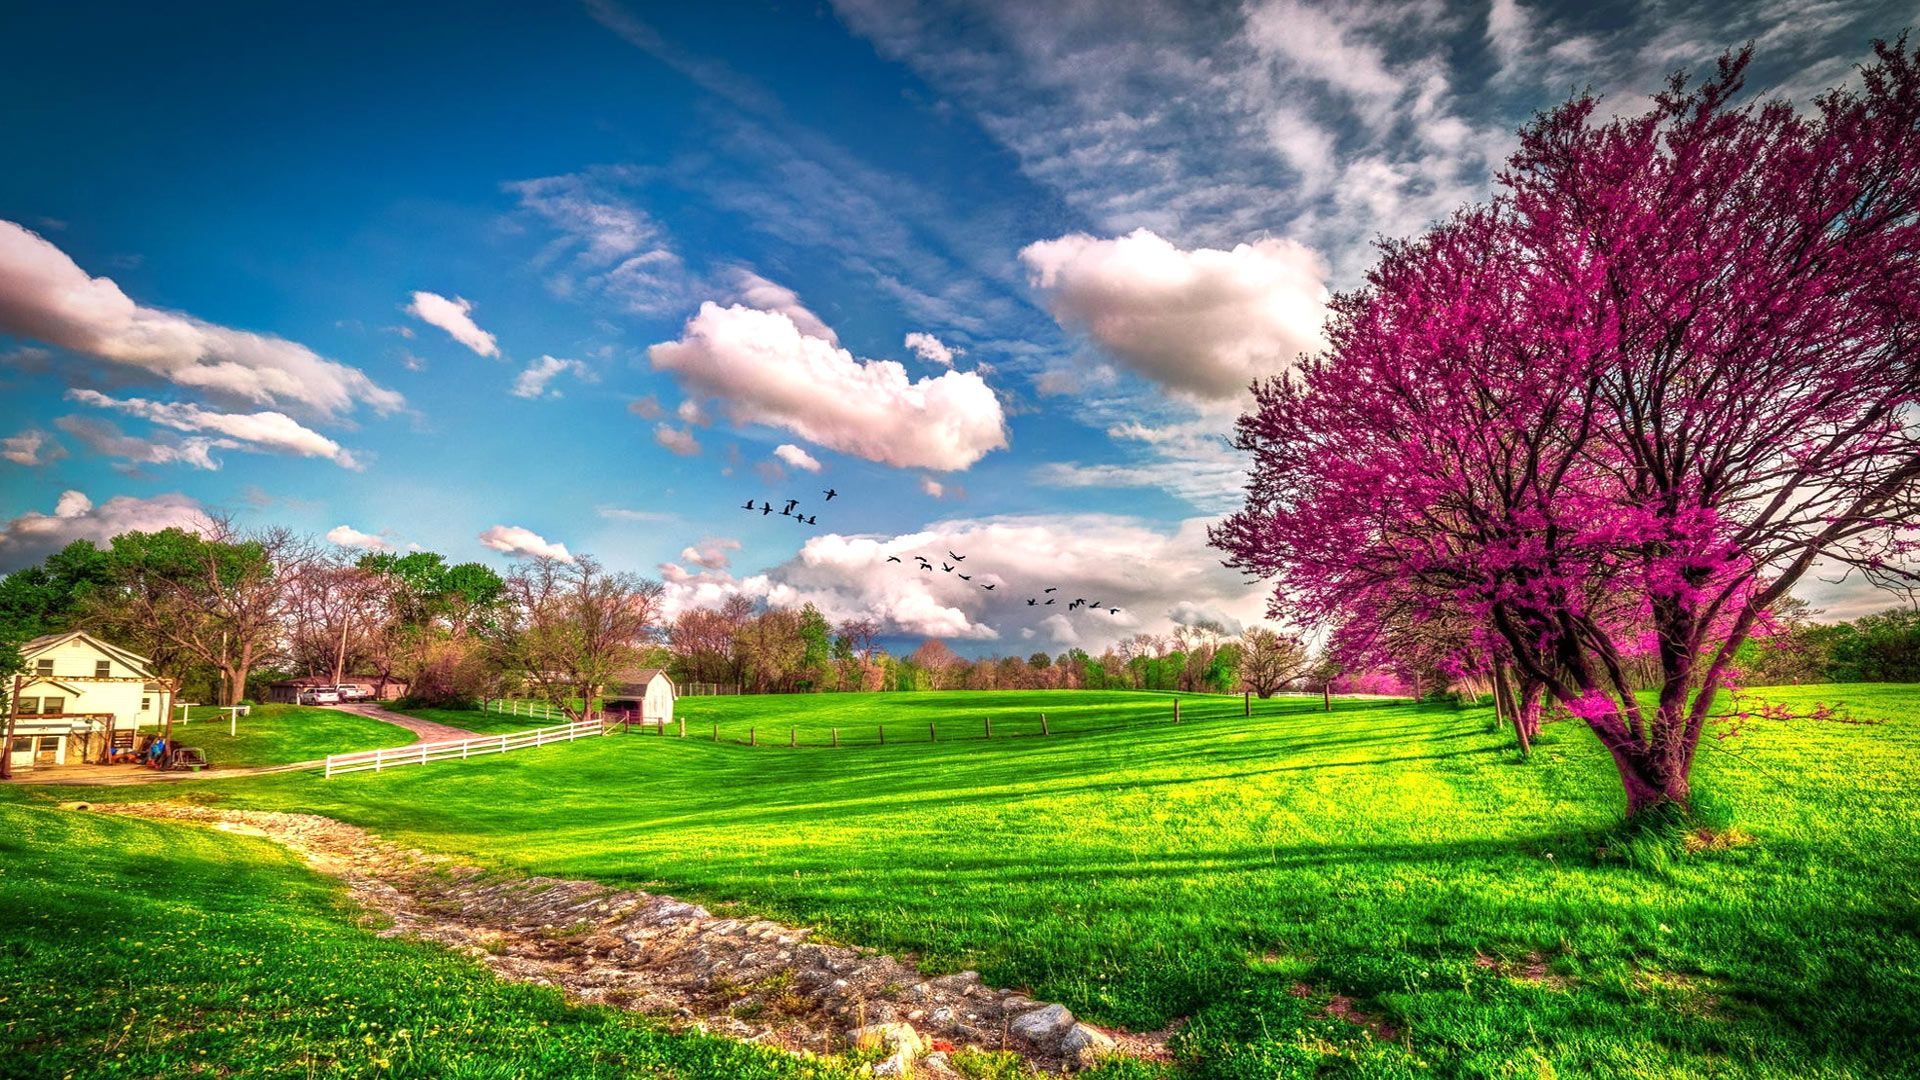 beautiful-spring-scenery-wallpapers-hd-1080p-1920x1080-desktop-03.jpg